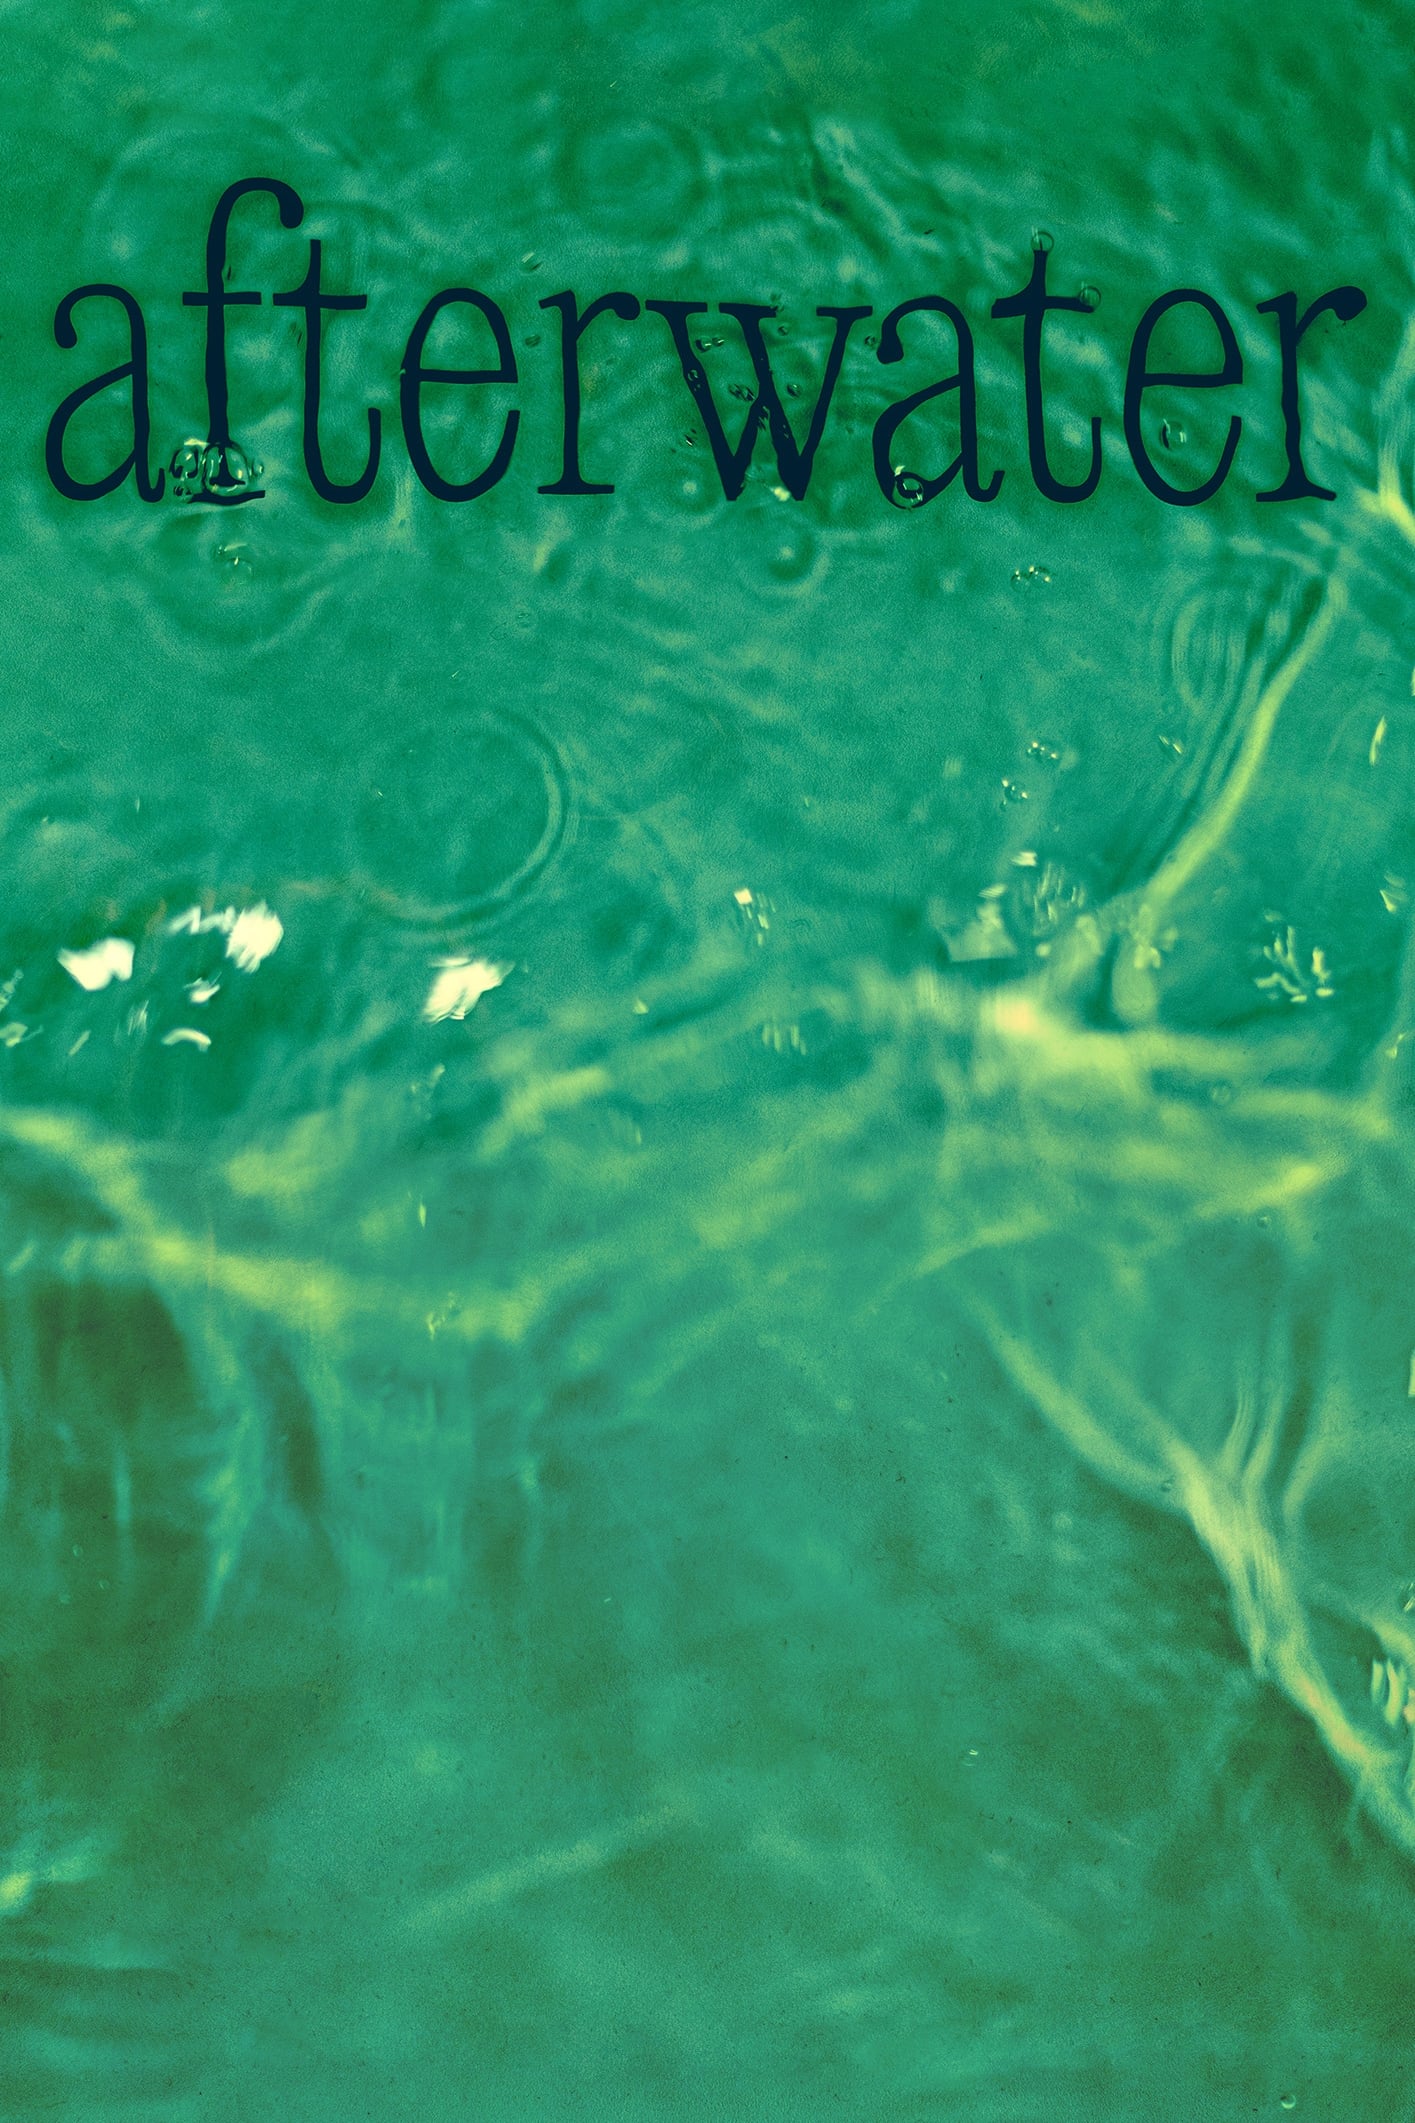 Caratula de Afterwater (Afterwater) 